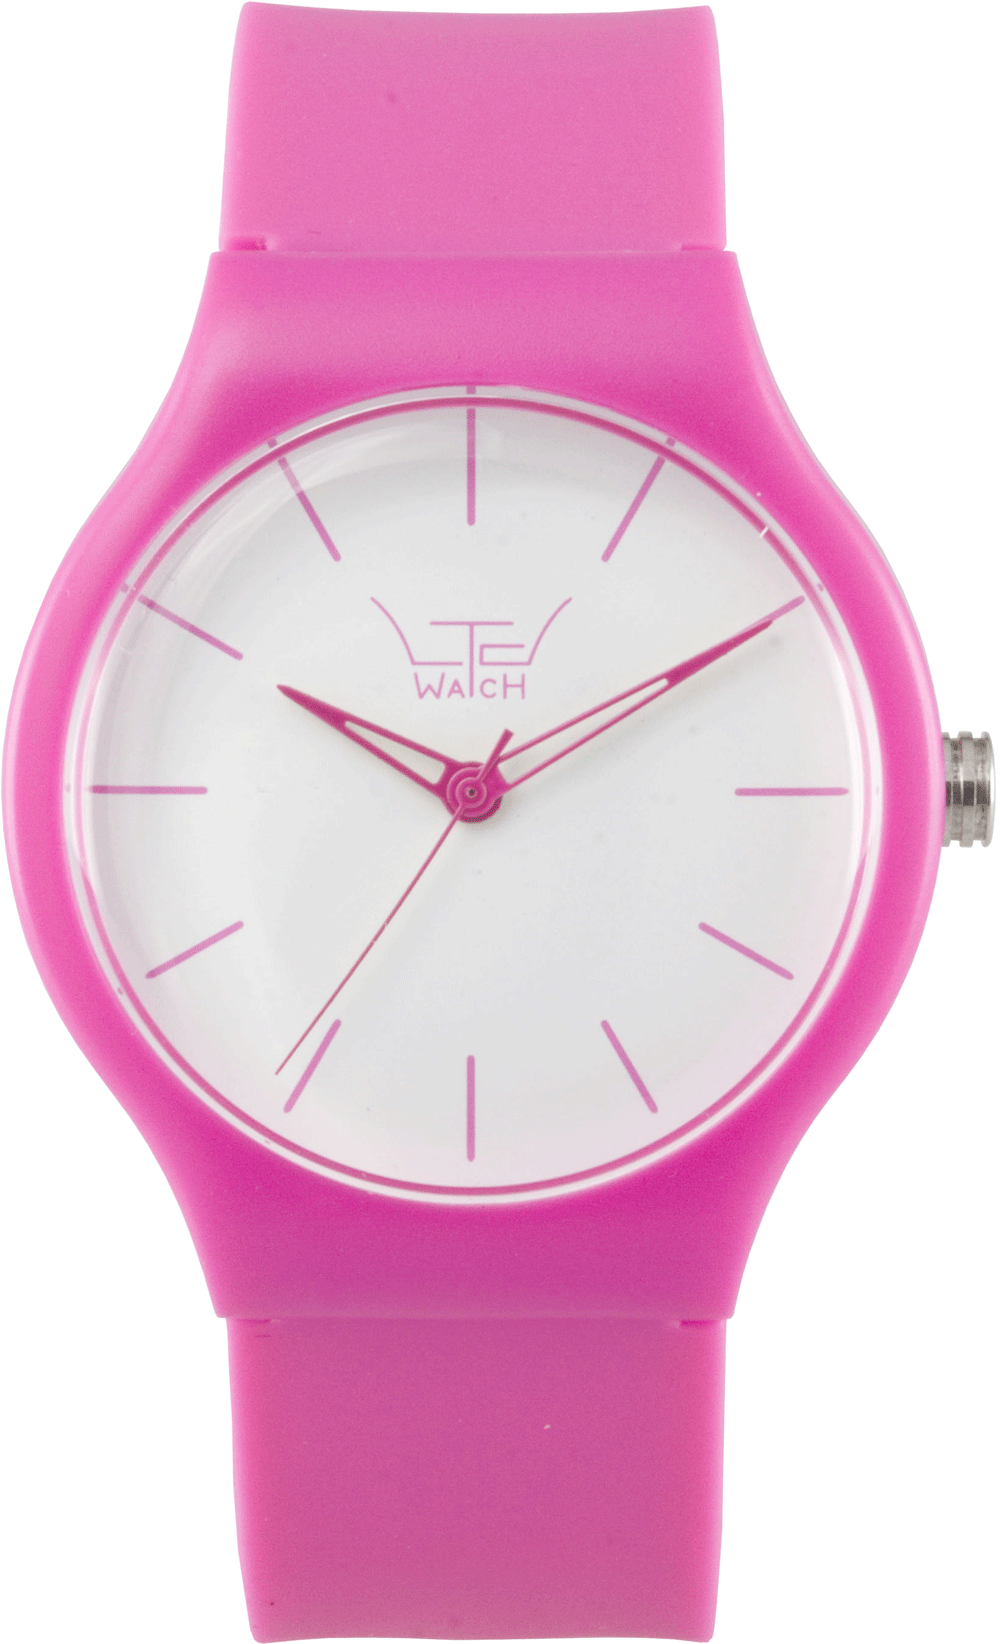 Foto LTD Watch Reloj unisex Pink 091202